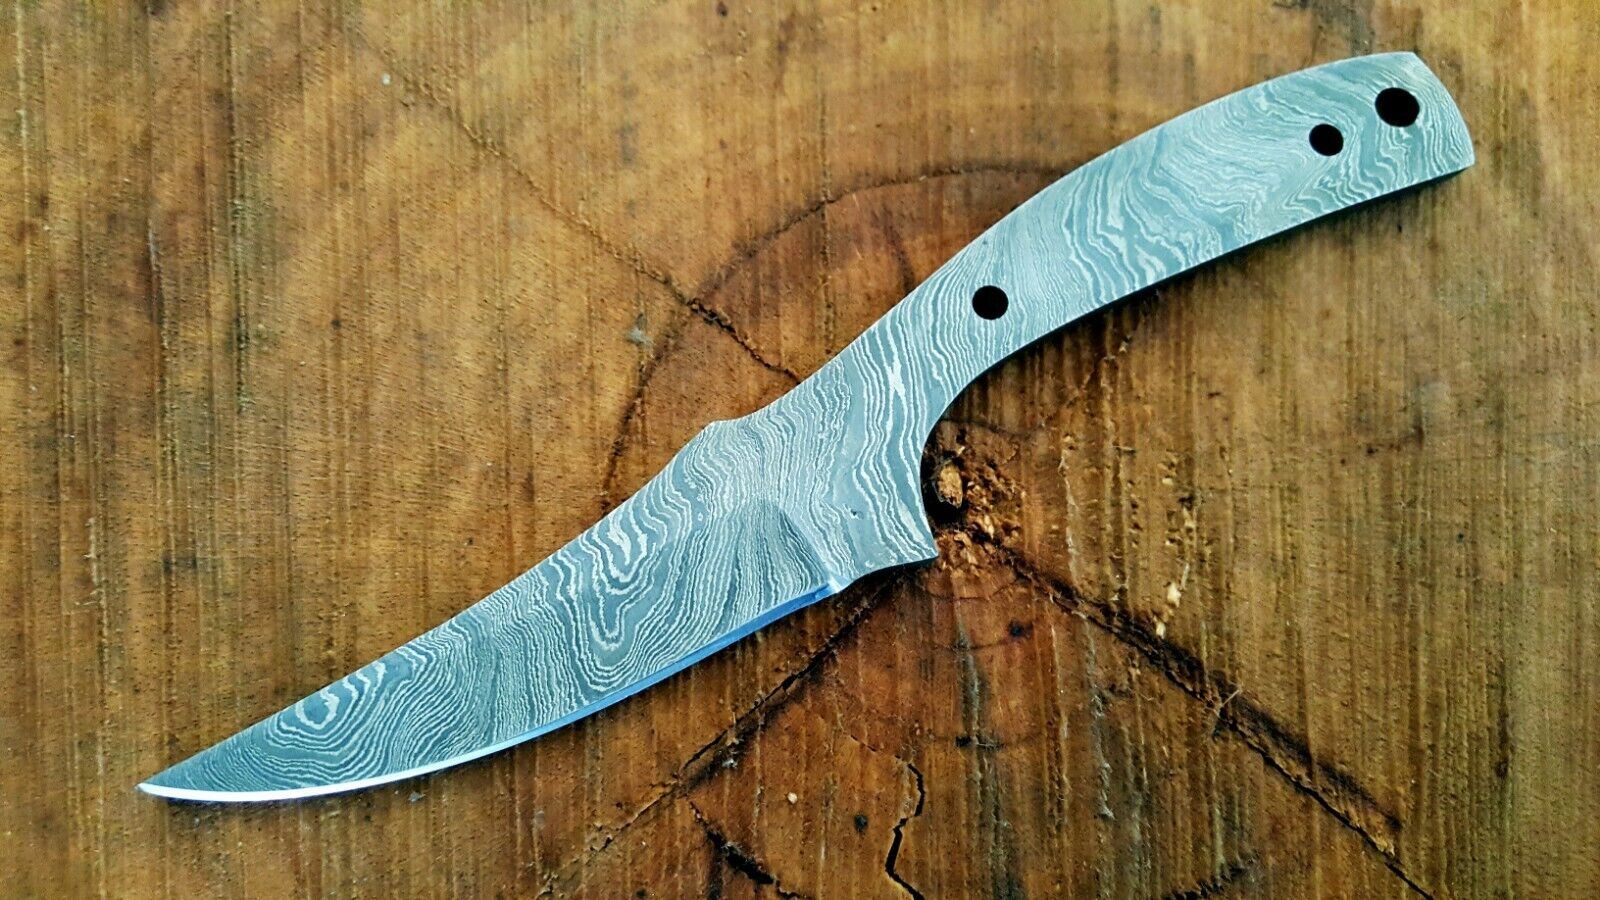 HAND FORGED DAMASCUS Steel Blank Blade Full Tang Skinner Knife Making Supplies